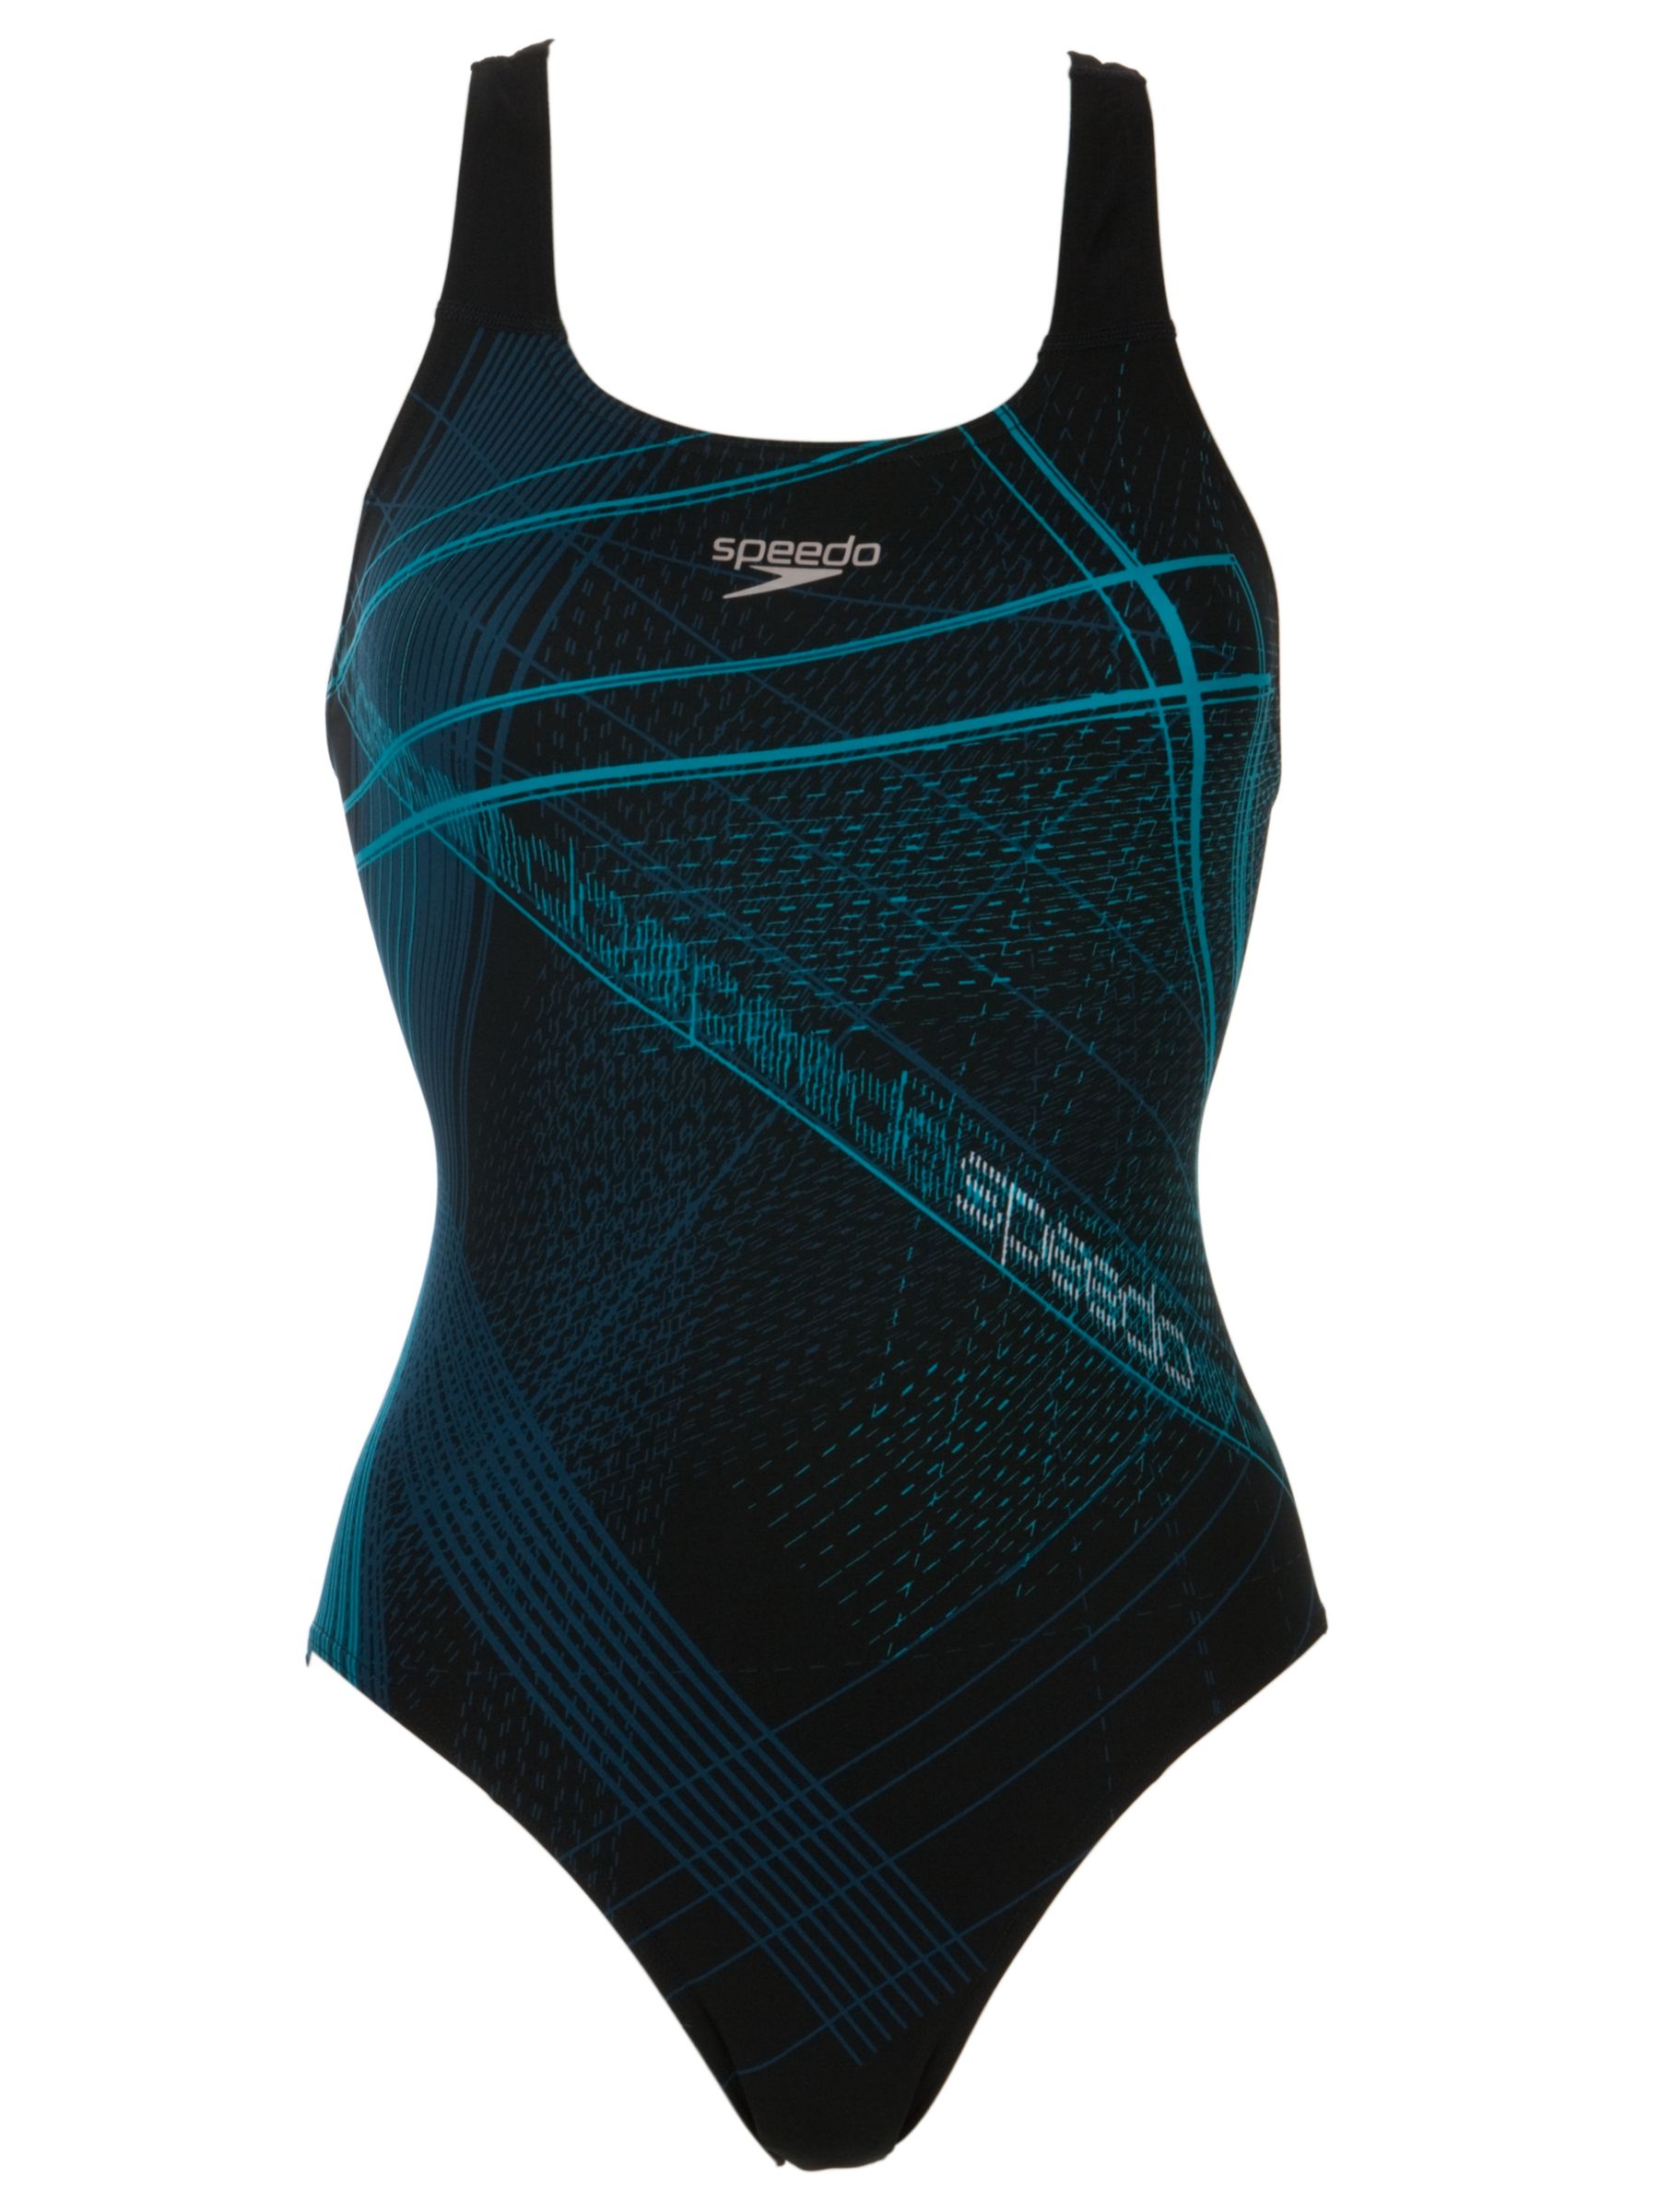 Speedo AquaSprint Placement Powerback Swimsuit,